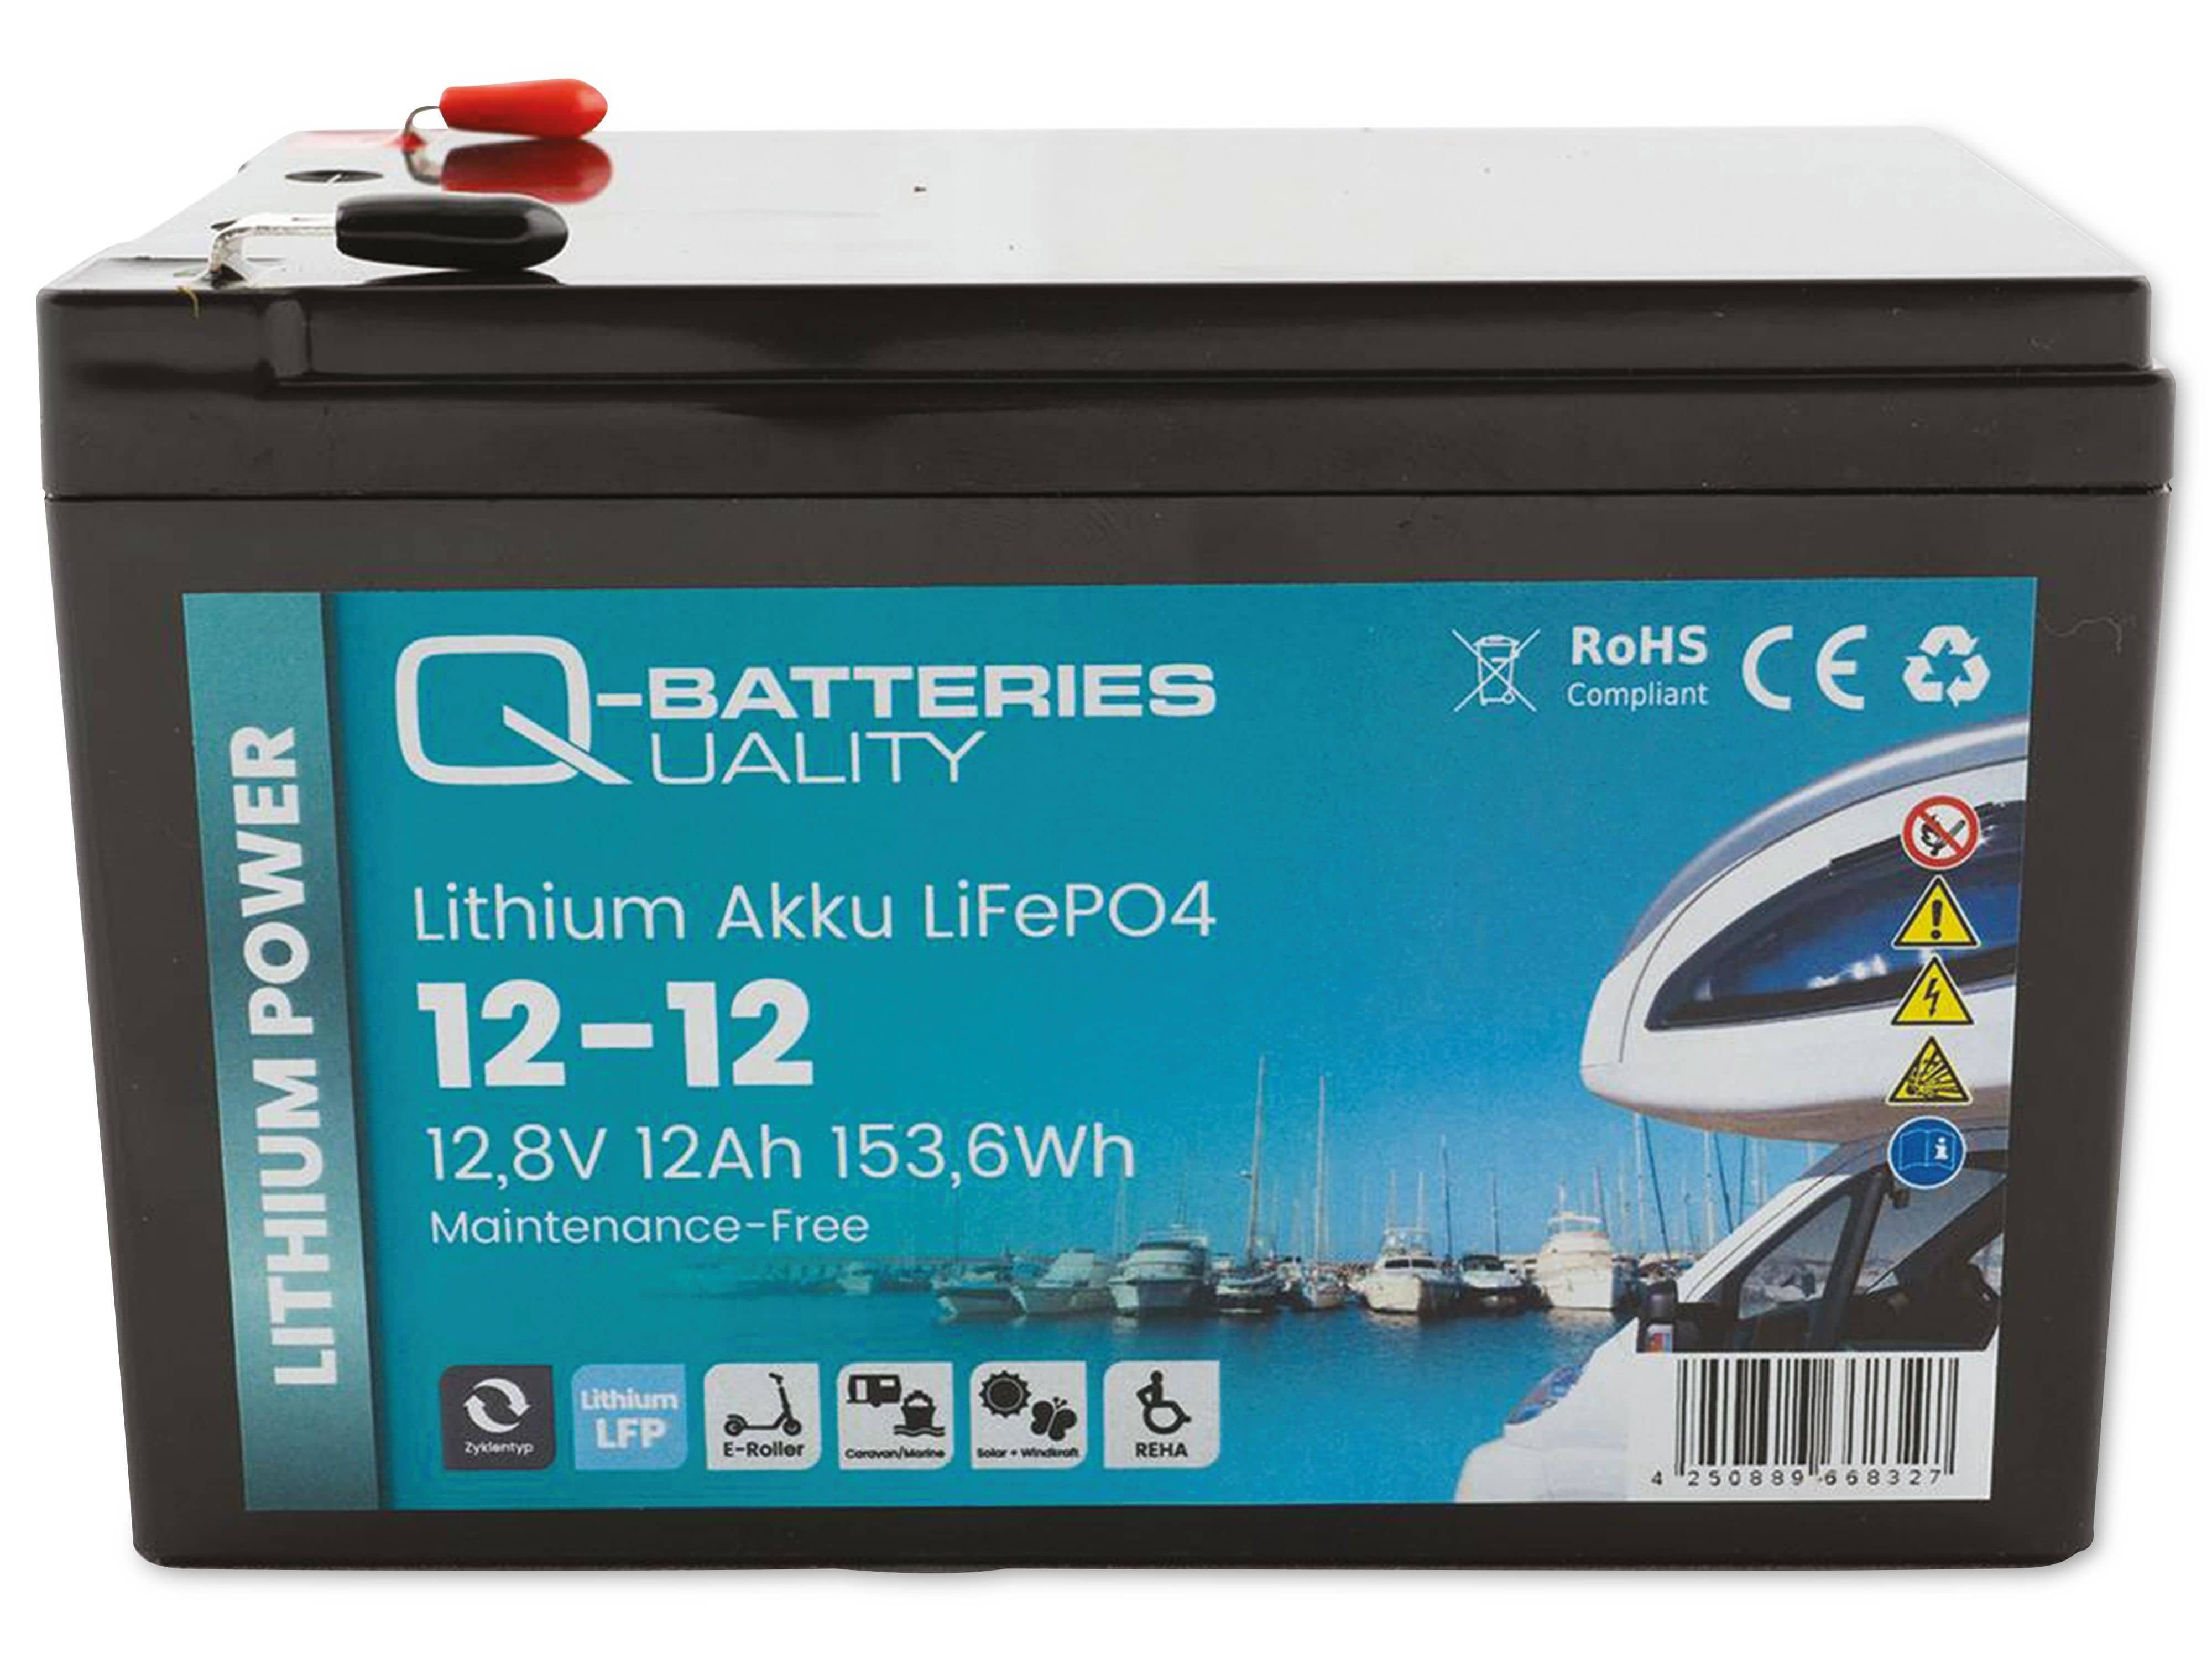 Q-Batteries Q-BATTERIES Lithium Akku 12-12 12,8V, 12Ah Batterie